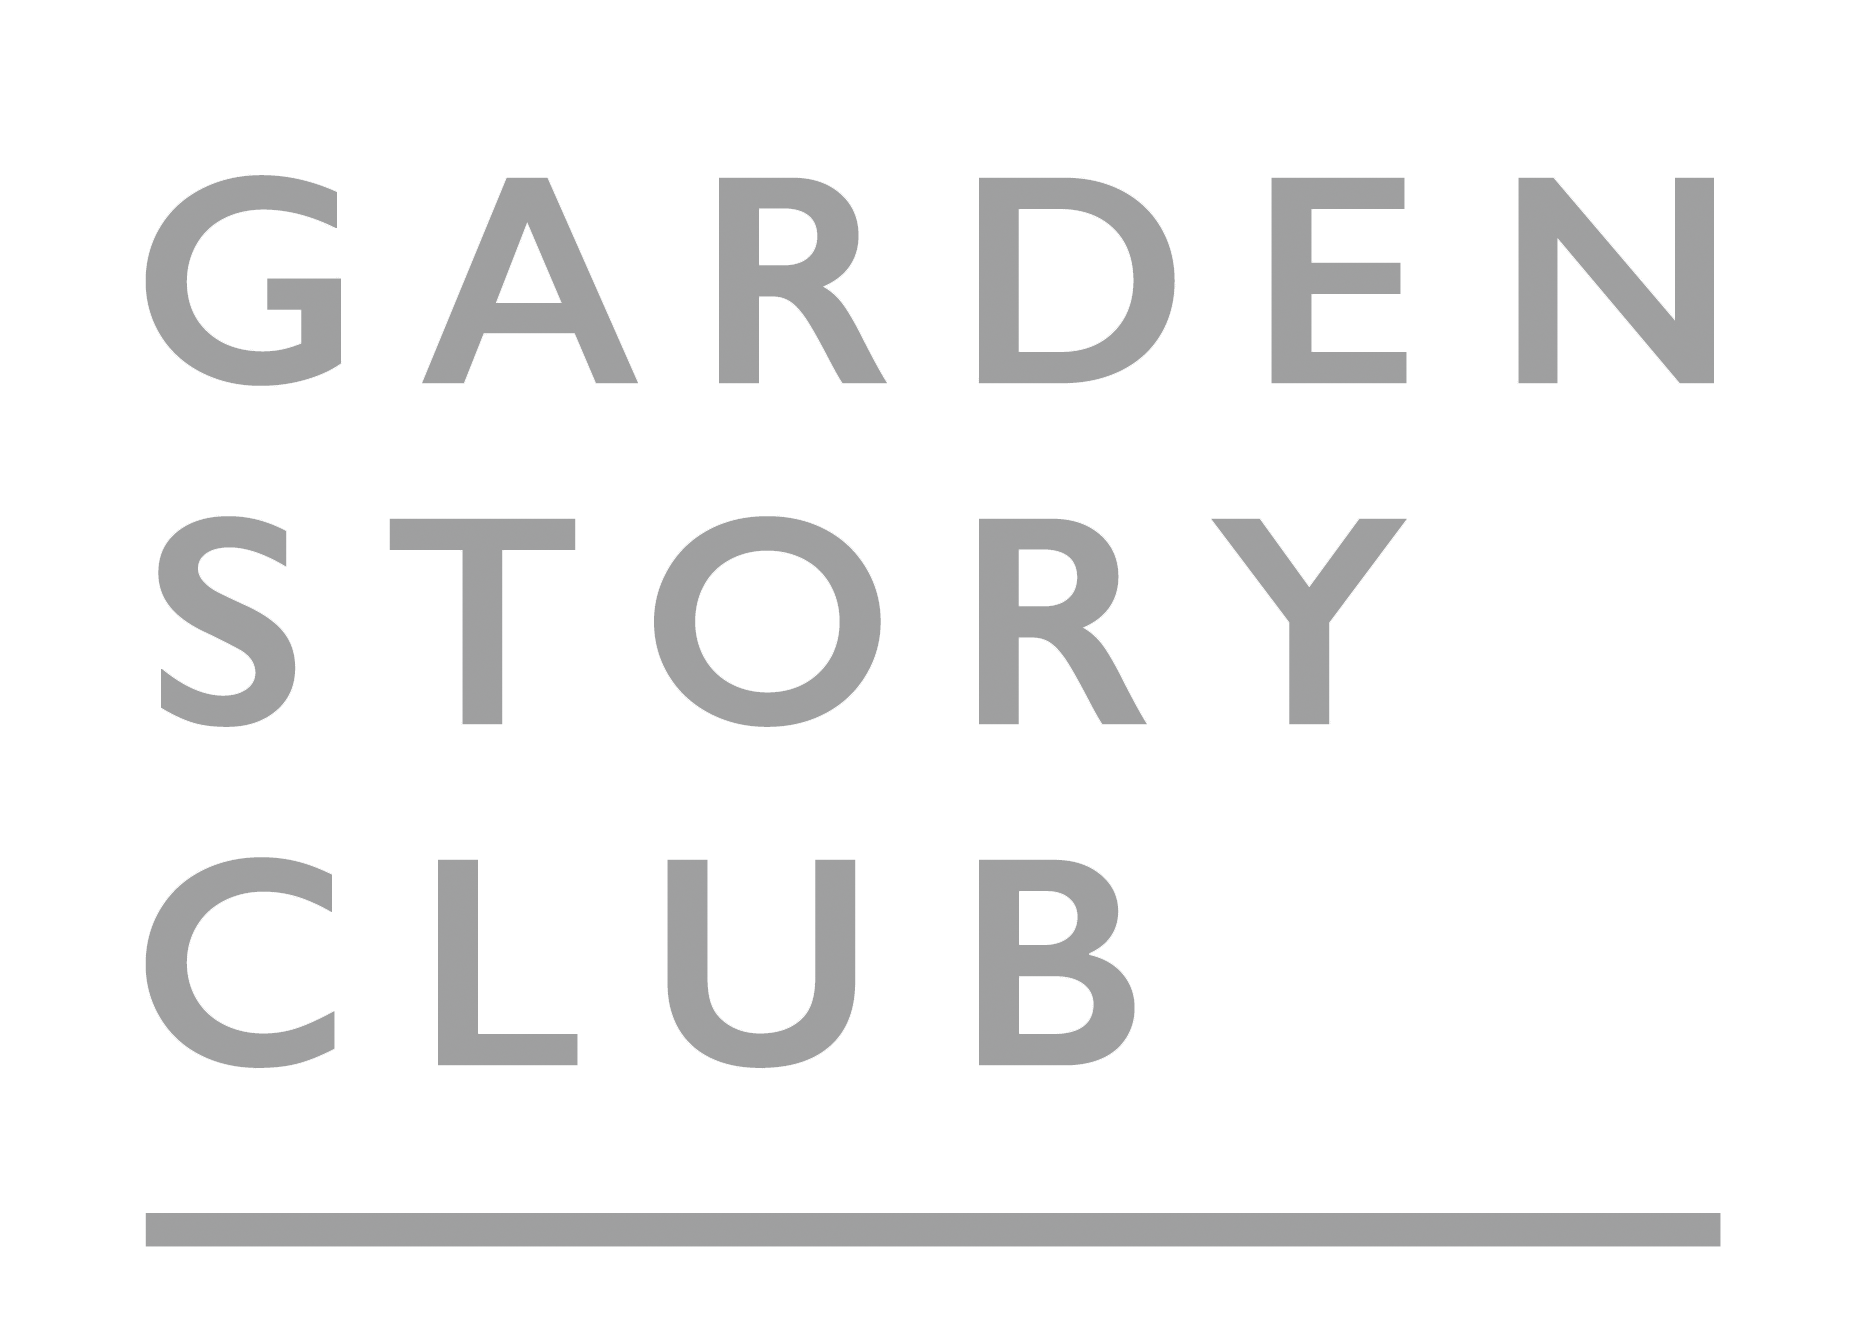 GARDEN STORY CLUB